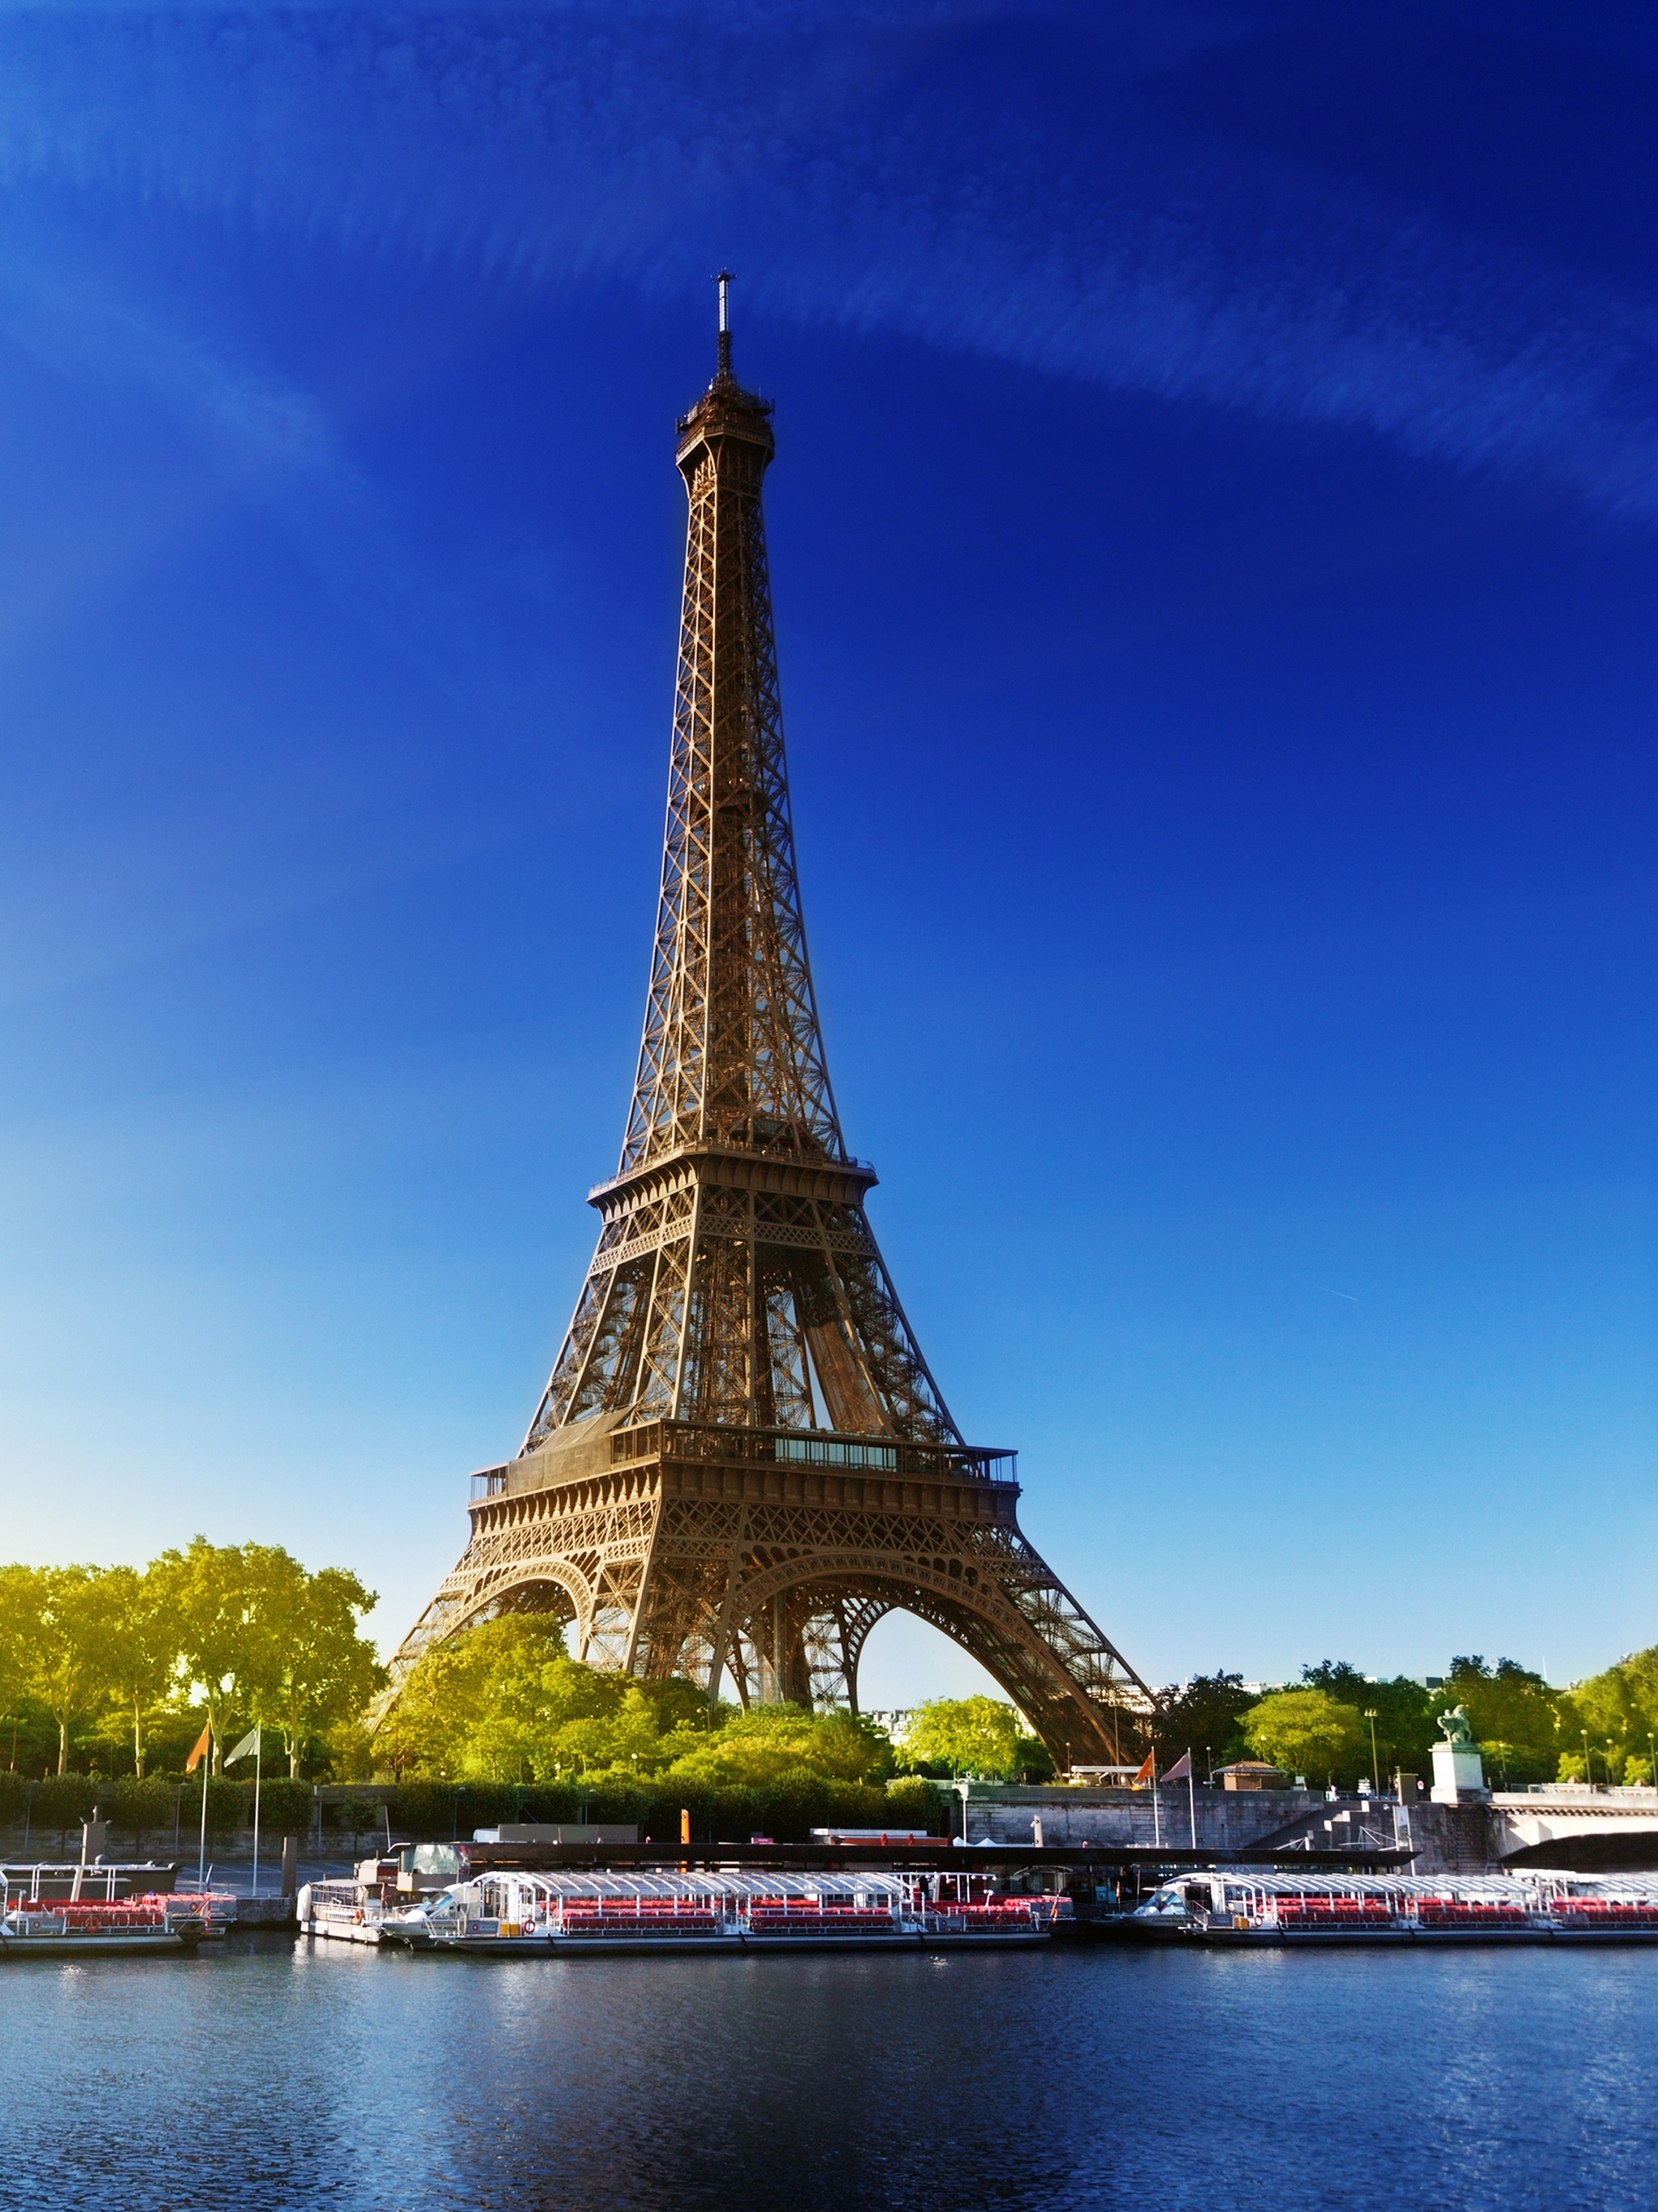 Eiffel Tower Paris for Apple iPad Pro resolution